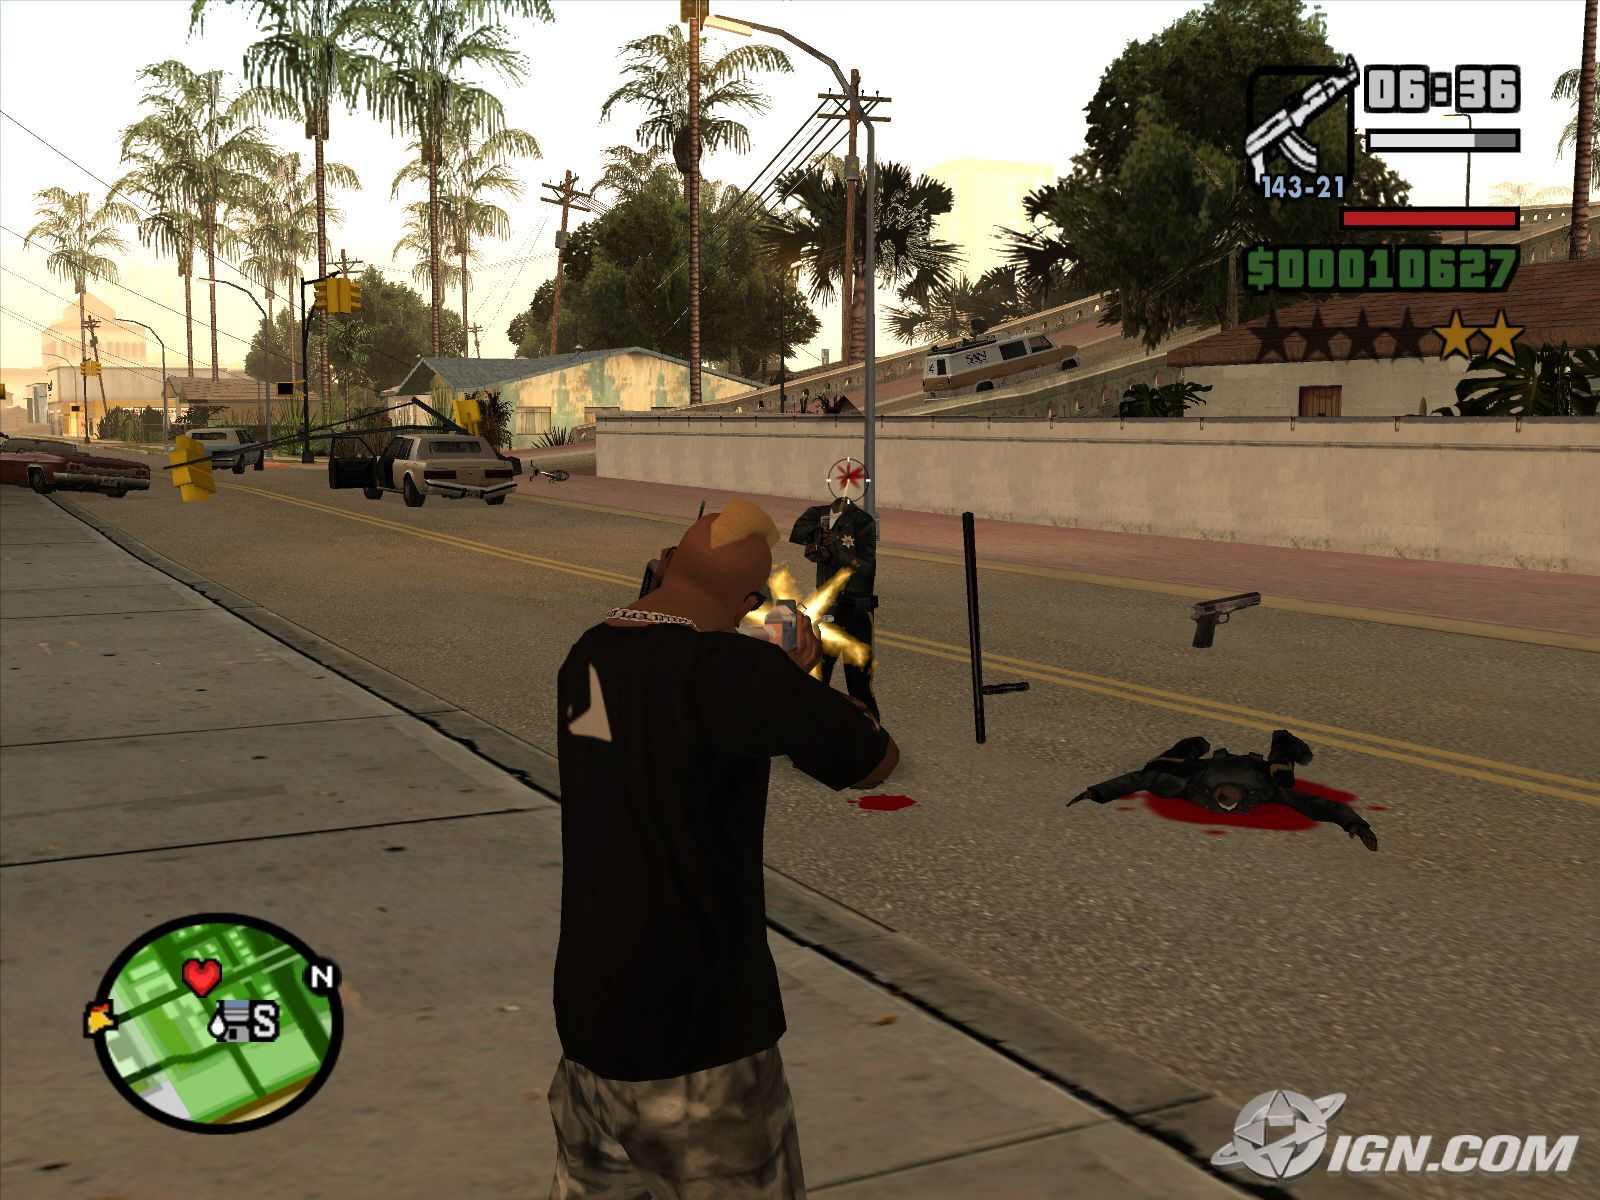 UPDATED Crack Do Gta San Andreas Multiplayer Chomikuj 3453454534646436